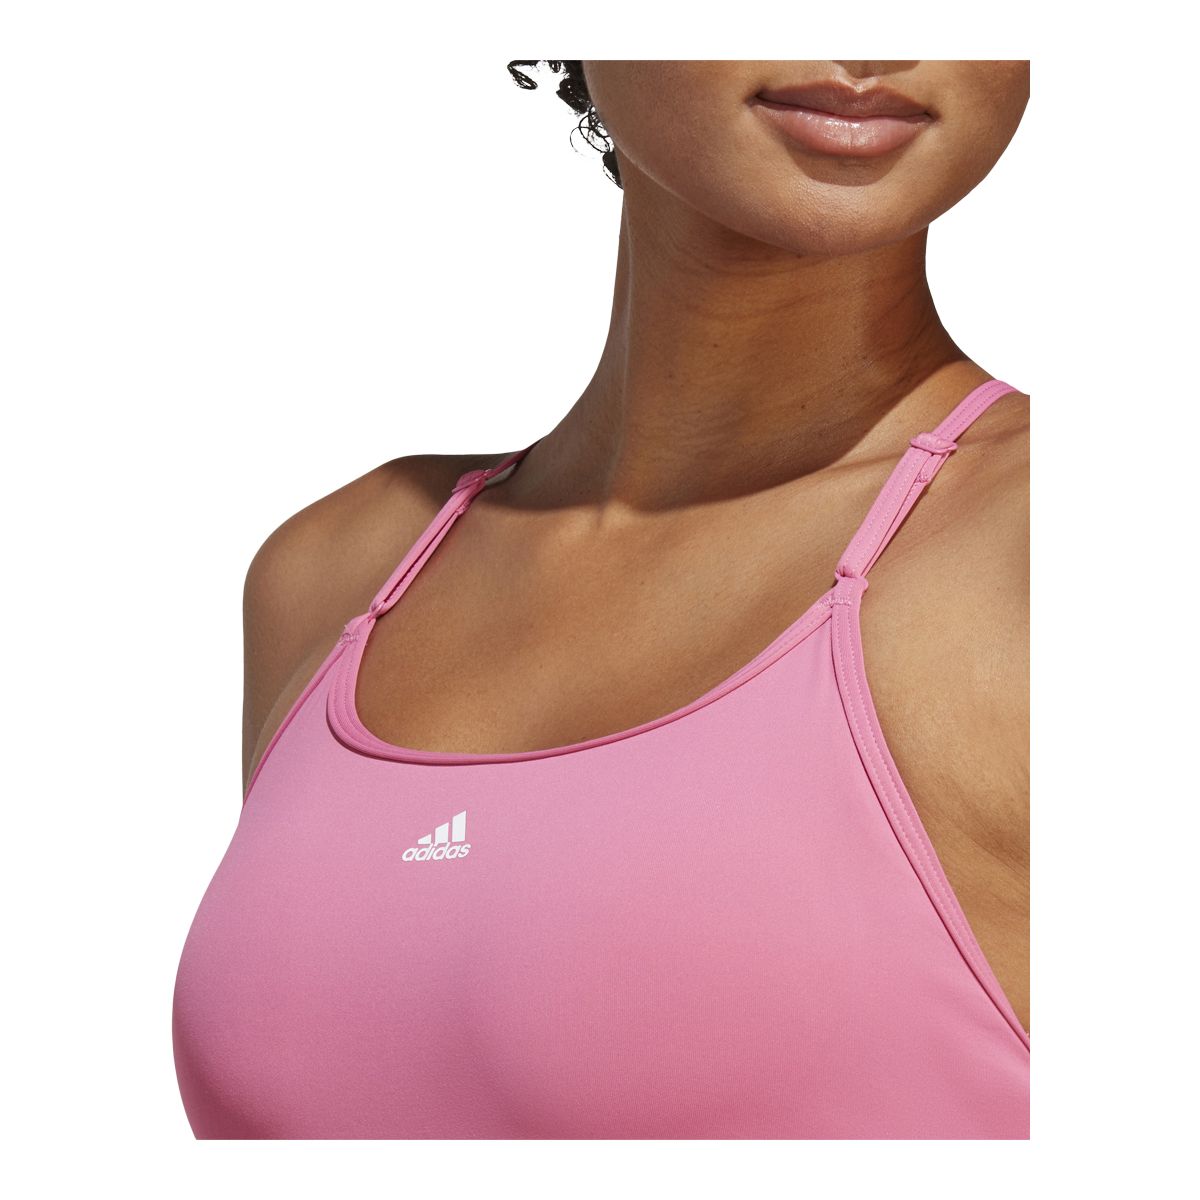 Adidas Women's Aeroreact Light Support P Workout Bra